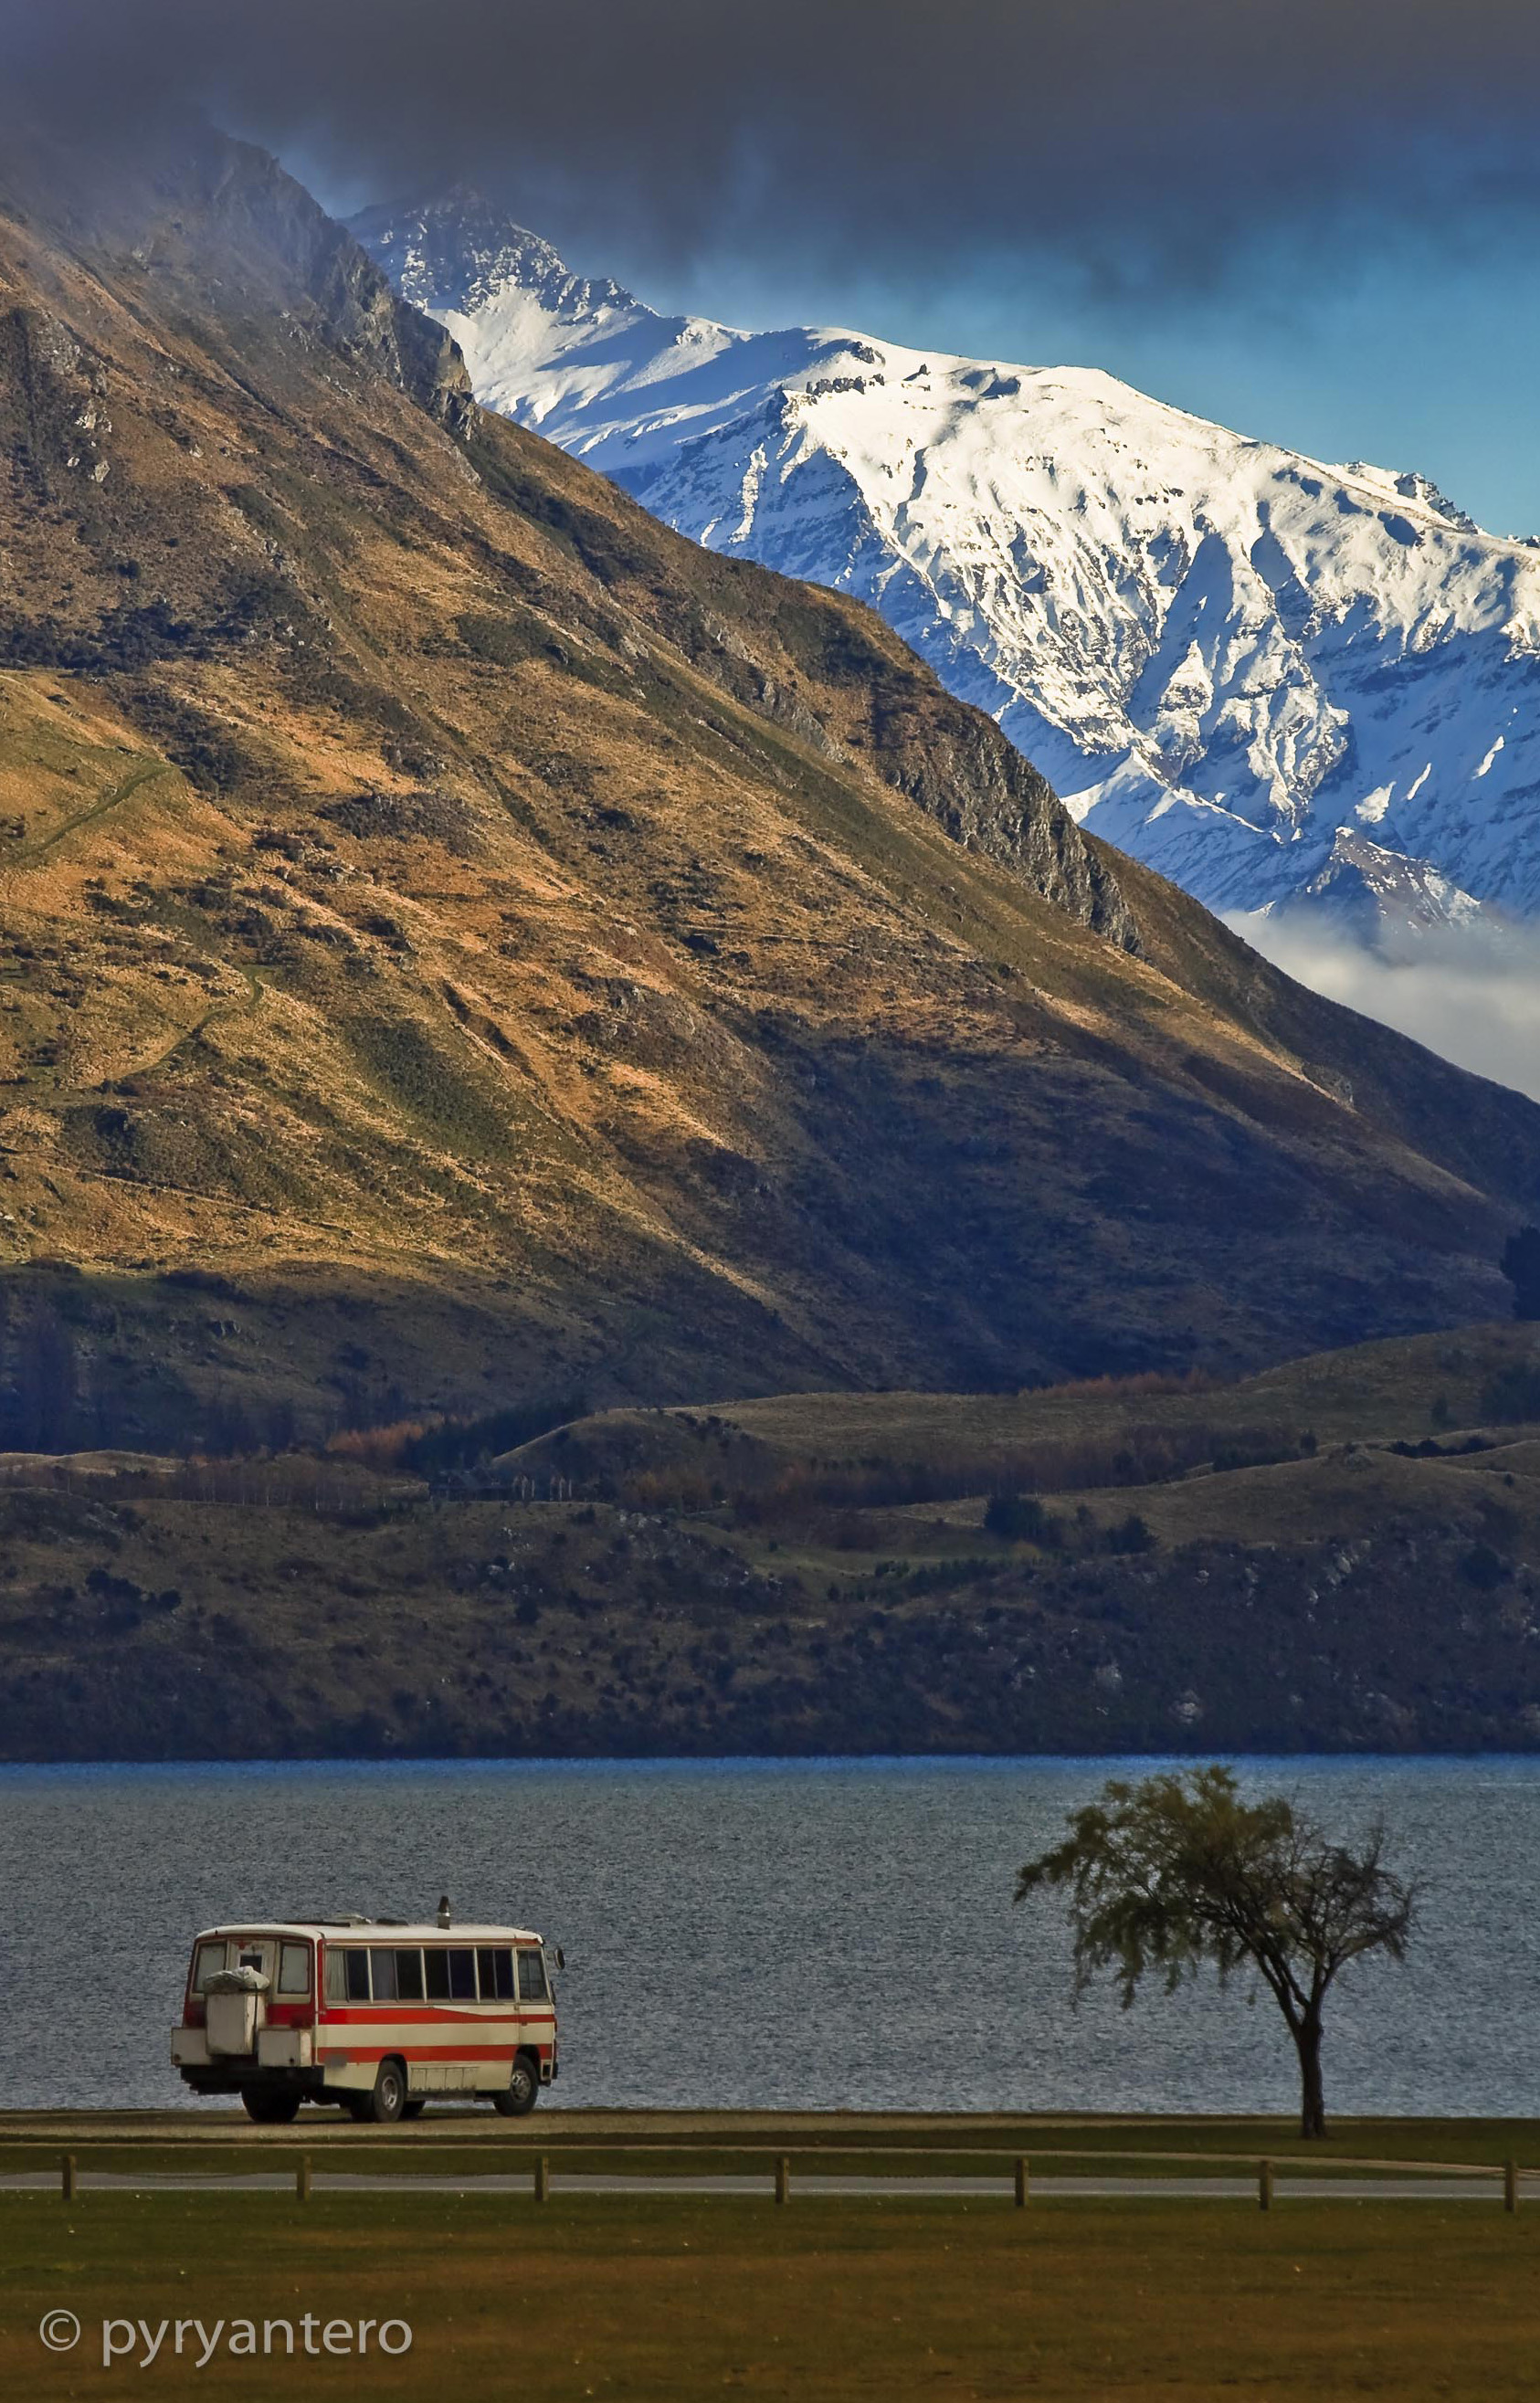 Landskape of Lake Wanaka and mountains, New Zealand. Pyry Antero Pietiläinen Photography, pyryantero